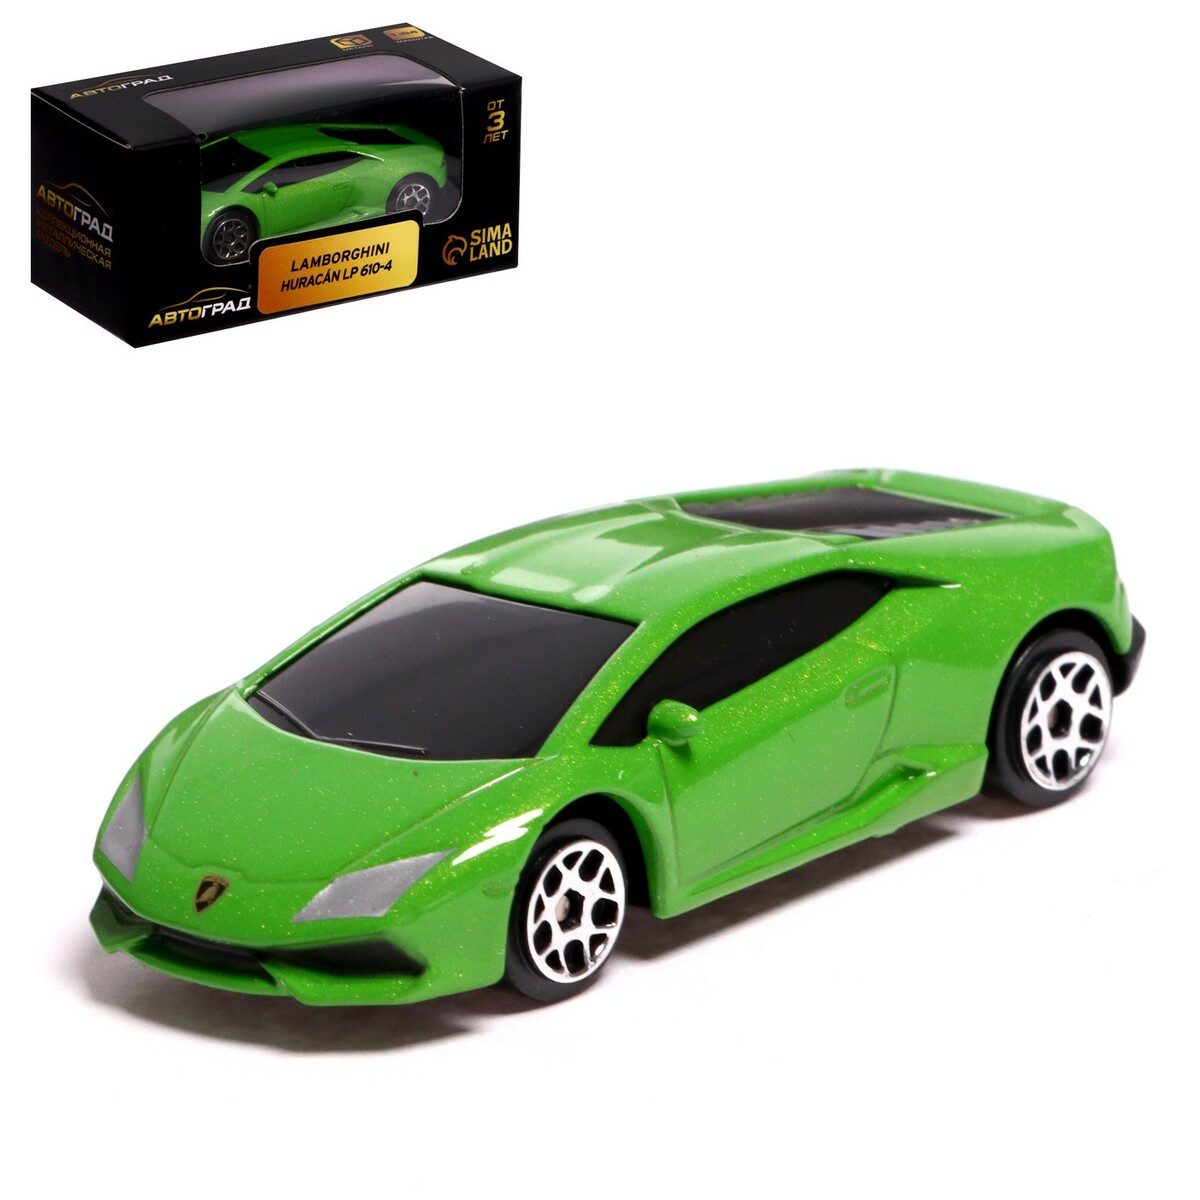 Машина металлическая lamborghini huracan lp610-4, 1:64, цвет зеленый bburago 1 32 lamborghini lp610 4 simulation alloy car model plexiglass dustproof display base packaging series collect gift toy